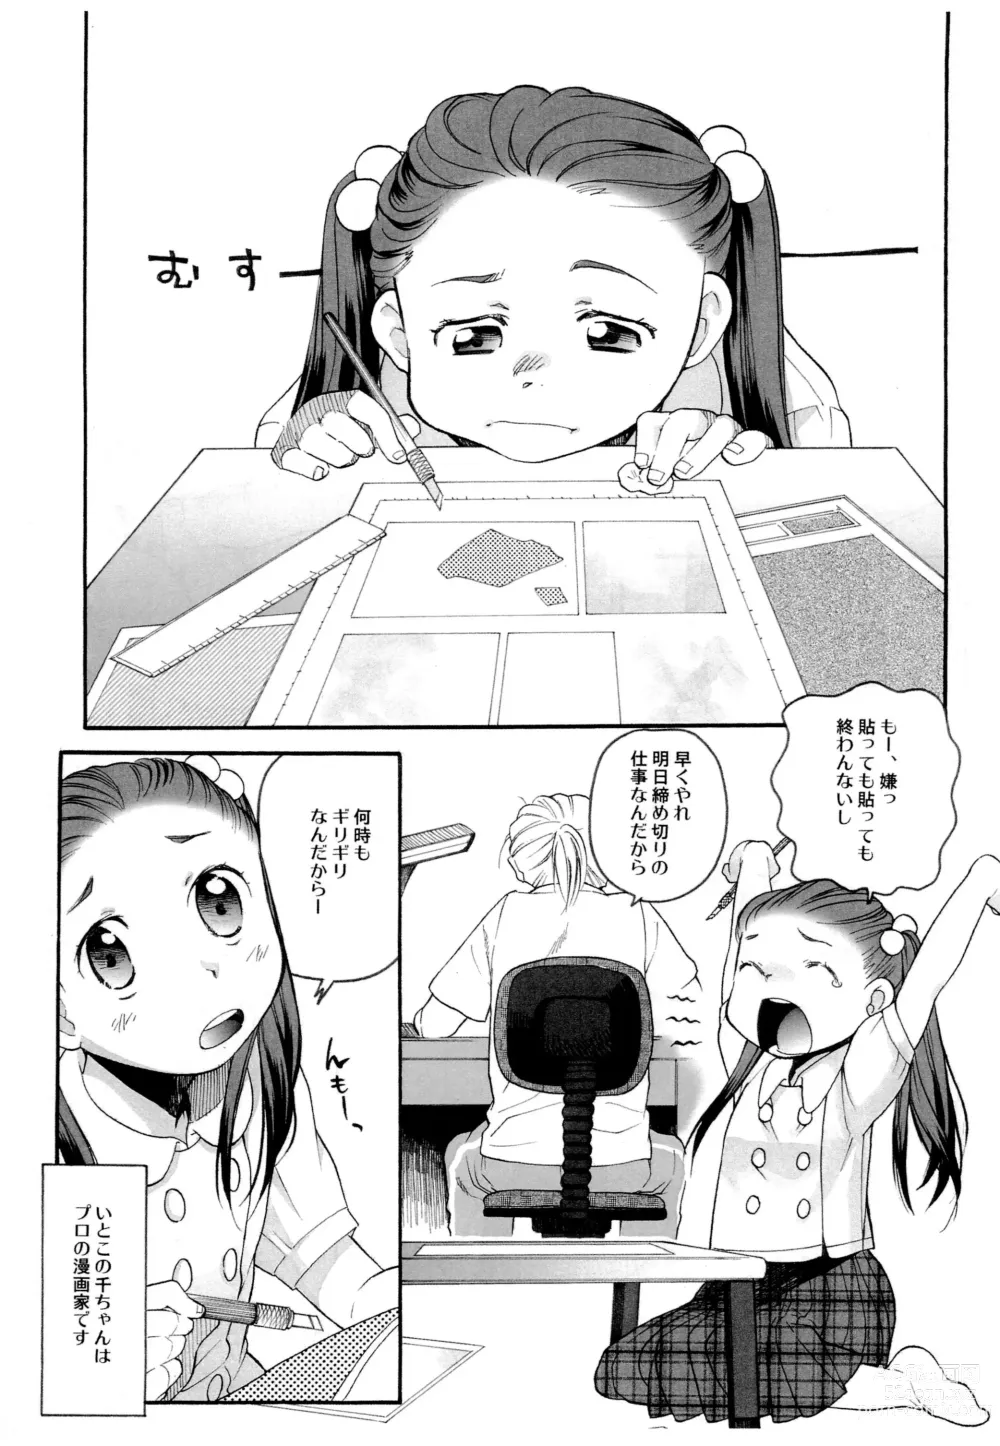 Page 7 of doujinshi Komi Komi